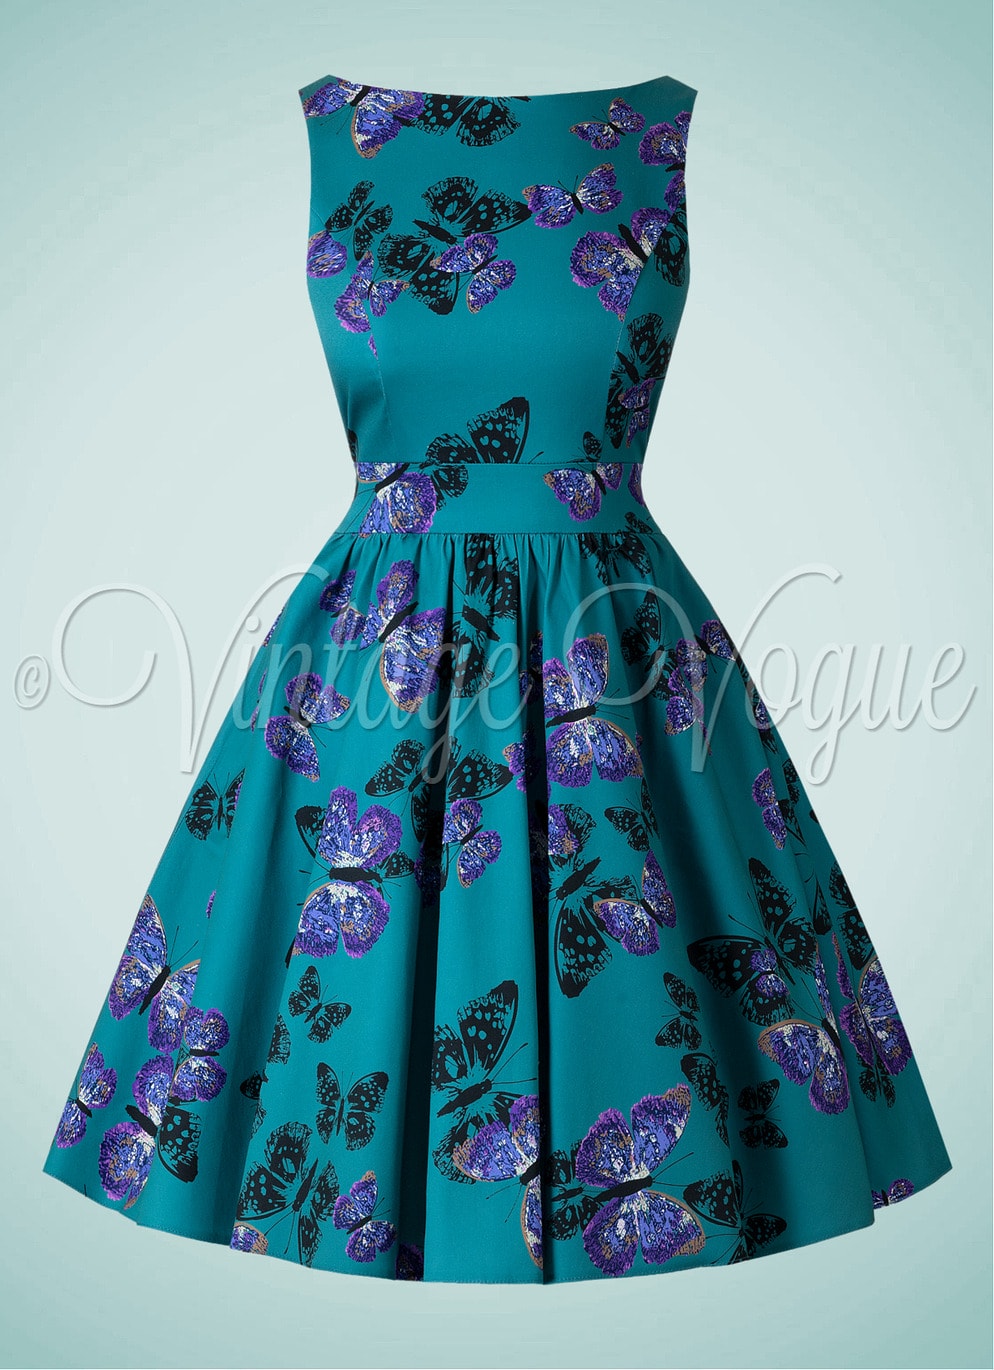 Lady Vintage 50's Retro Swing Schmetterlinge Kleid Butterfly Tea Dress in Petrol Türkis Blau 50er Jahre Petticoat Damenkleid Hochzeitsgast Elegant